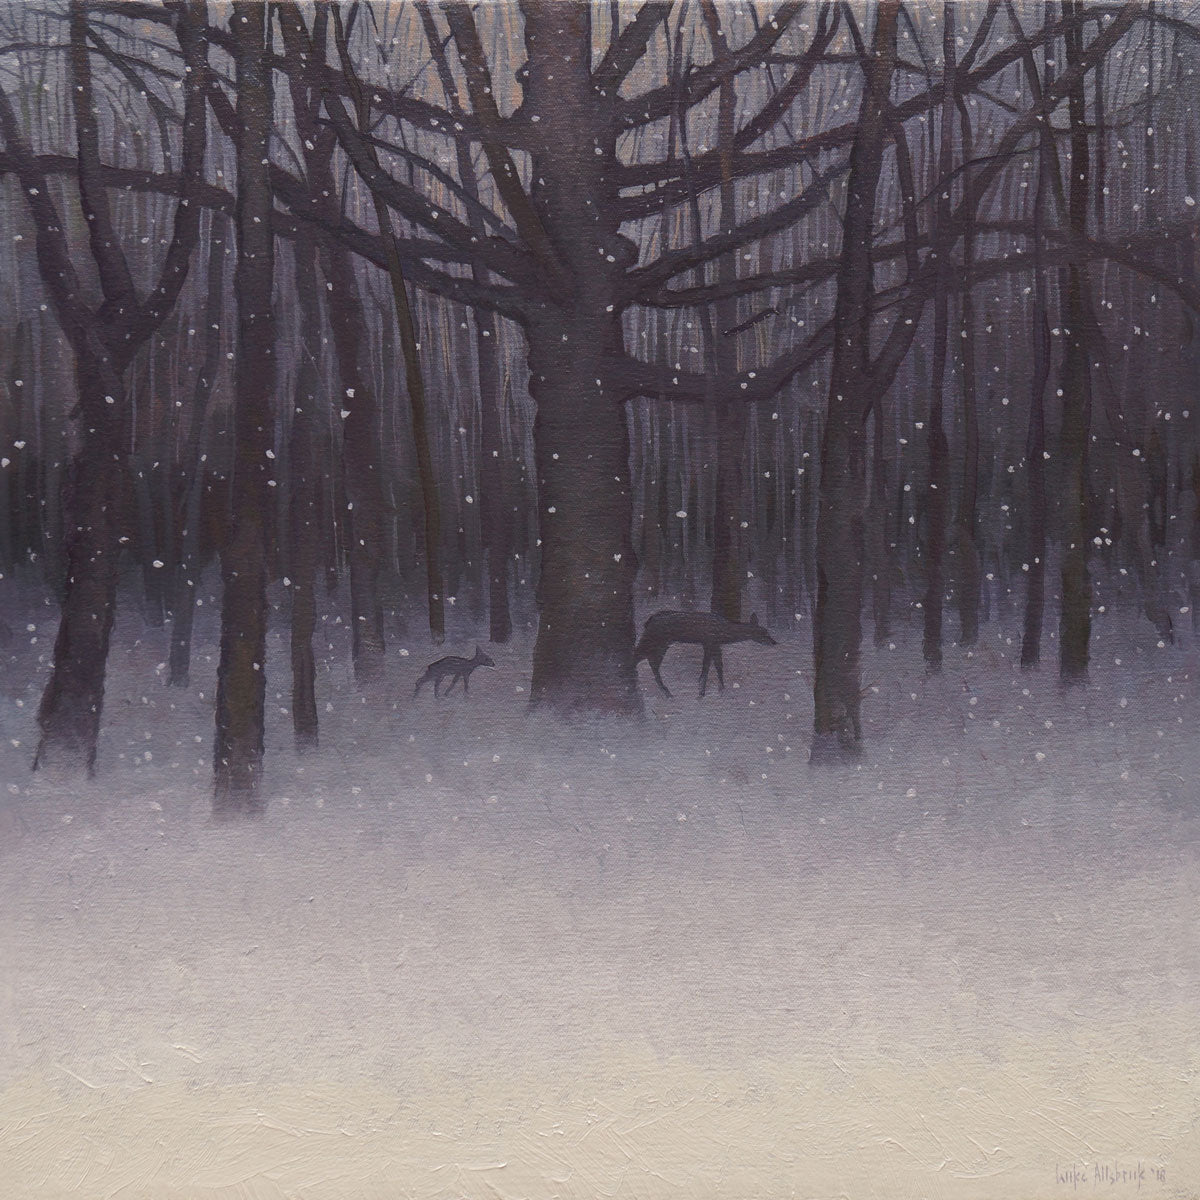 Fawn in an Evening Snowfall